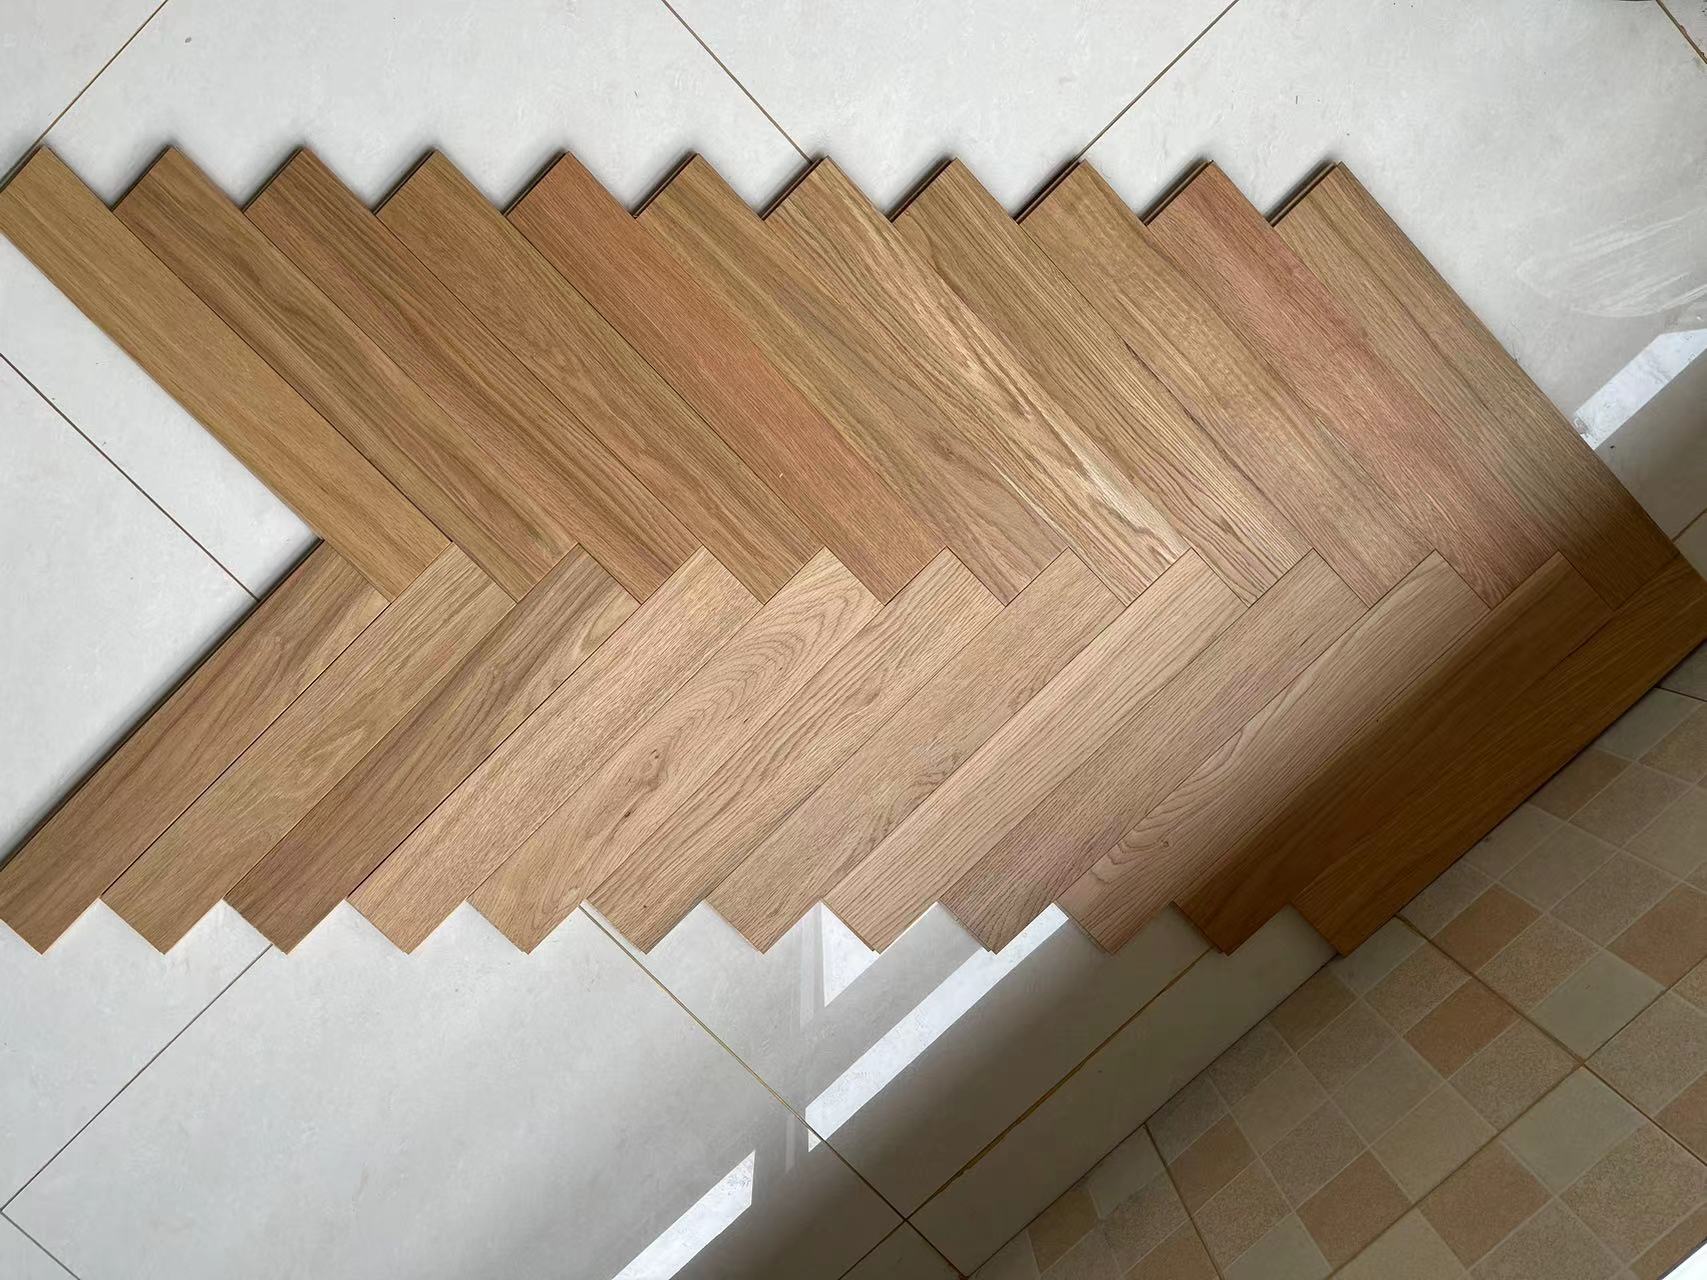 Oak Herringbone Flooring Natural Lacquered Finis Finde Wood Floors Timber Home Decoration Art Tile Wallpaper Déco